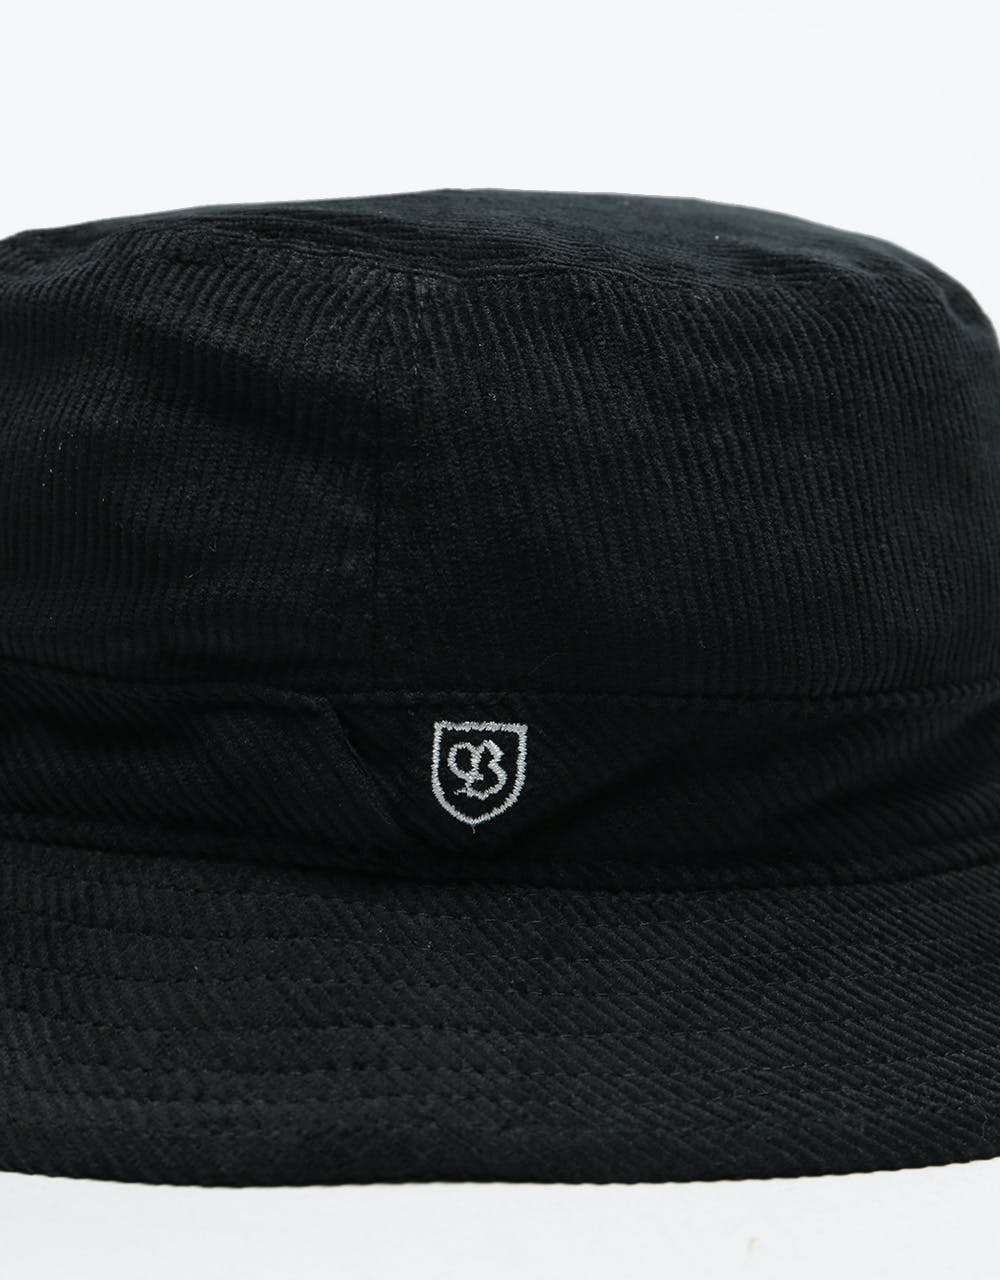 Brixton B-Shield Bucket Hat - Black